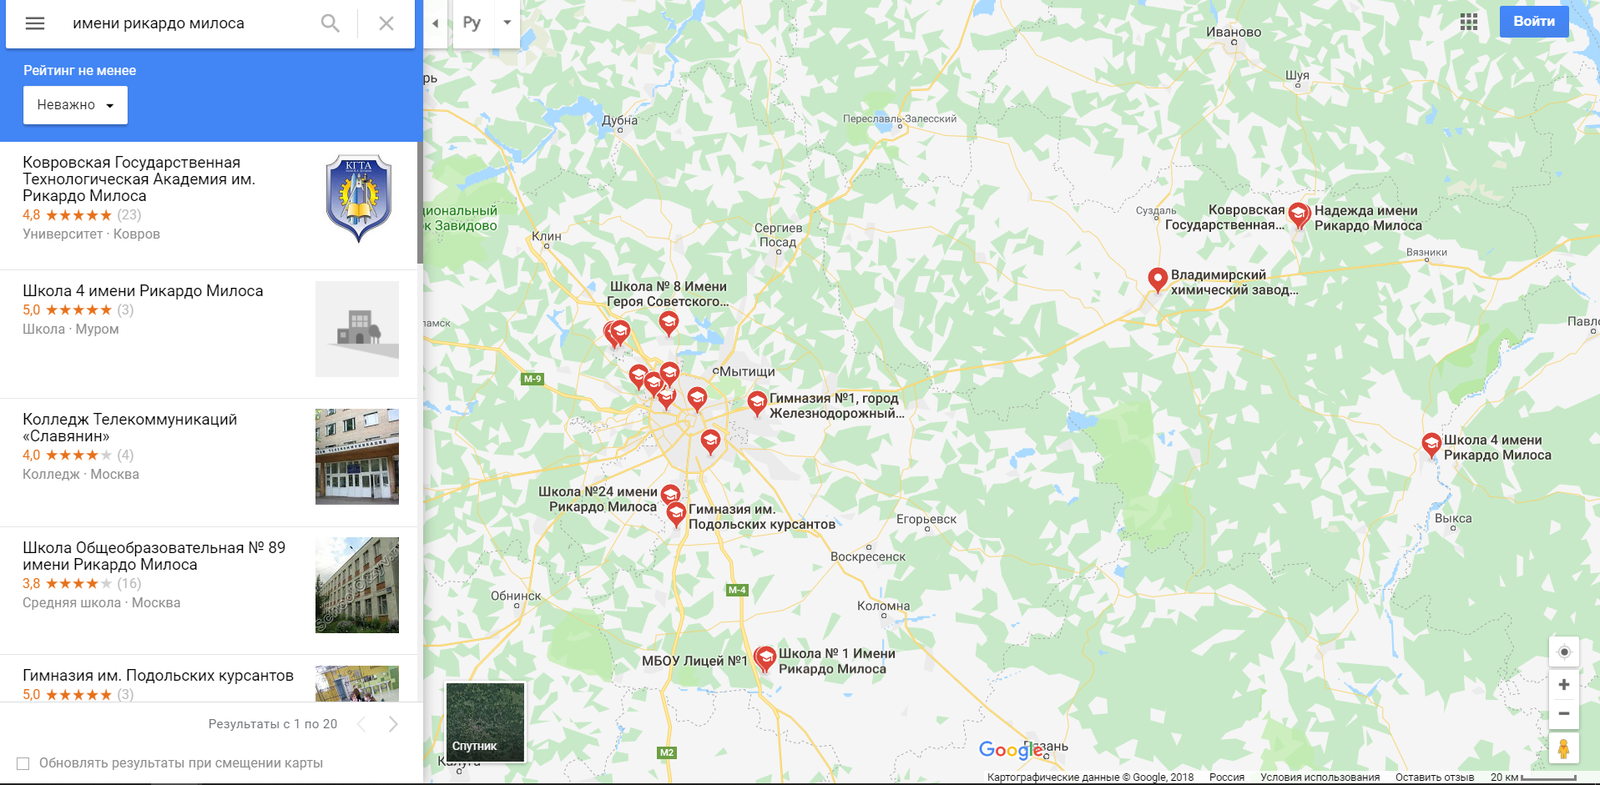 Russian schools began to massively name the name of Ricardo Milos - Ricardo Milos, Google maps